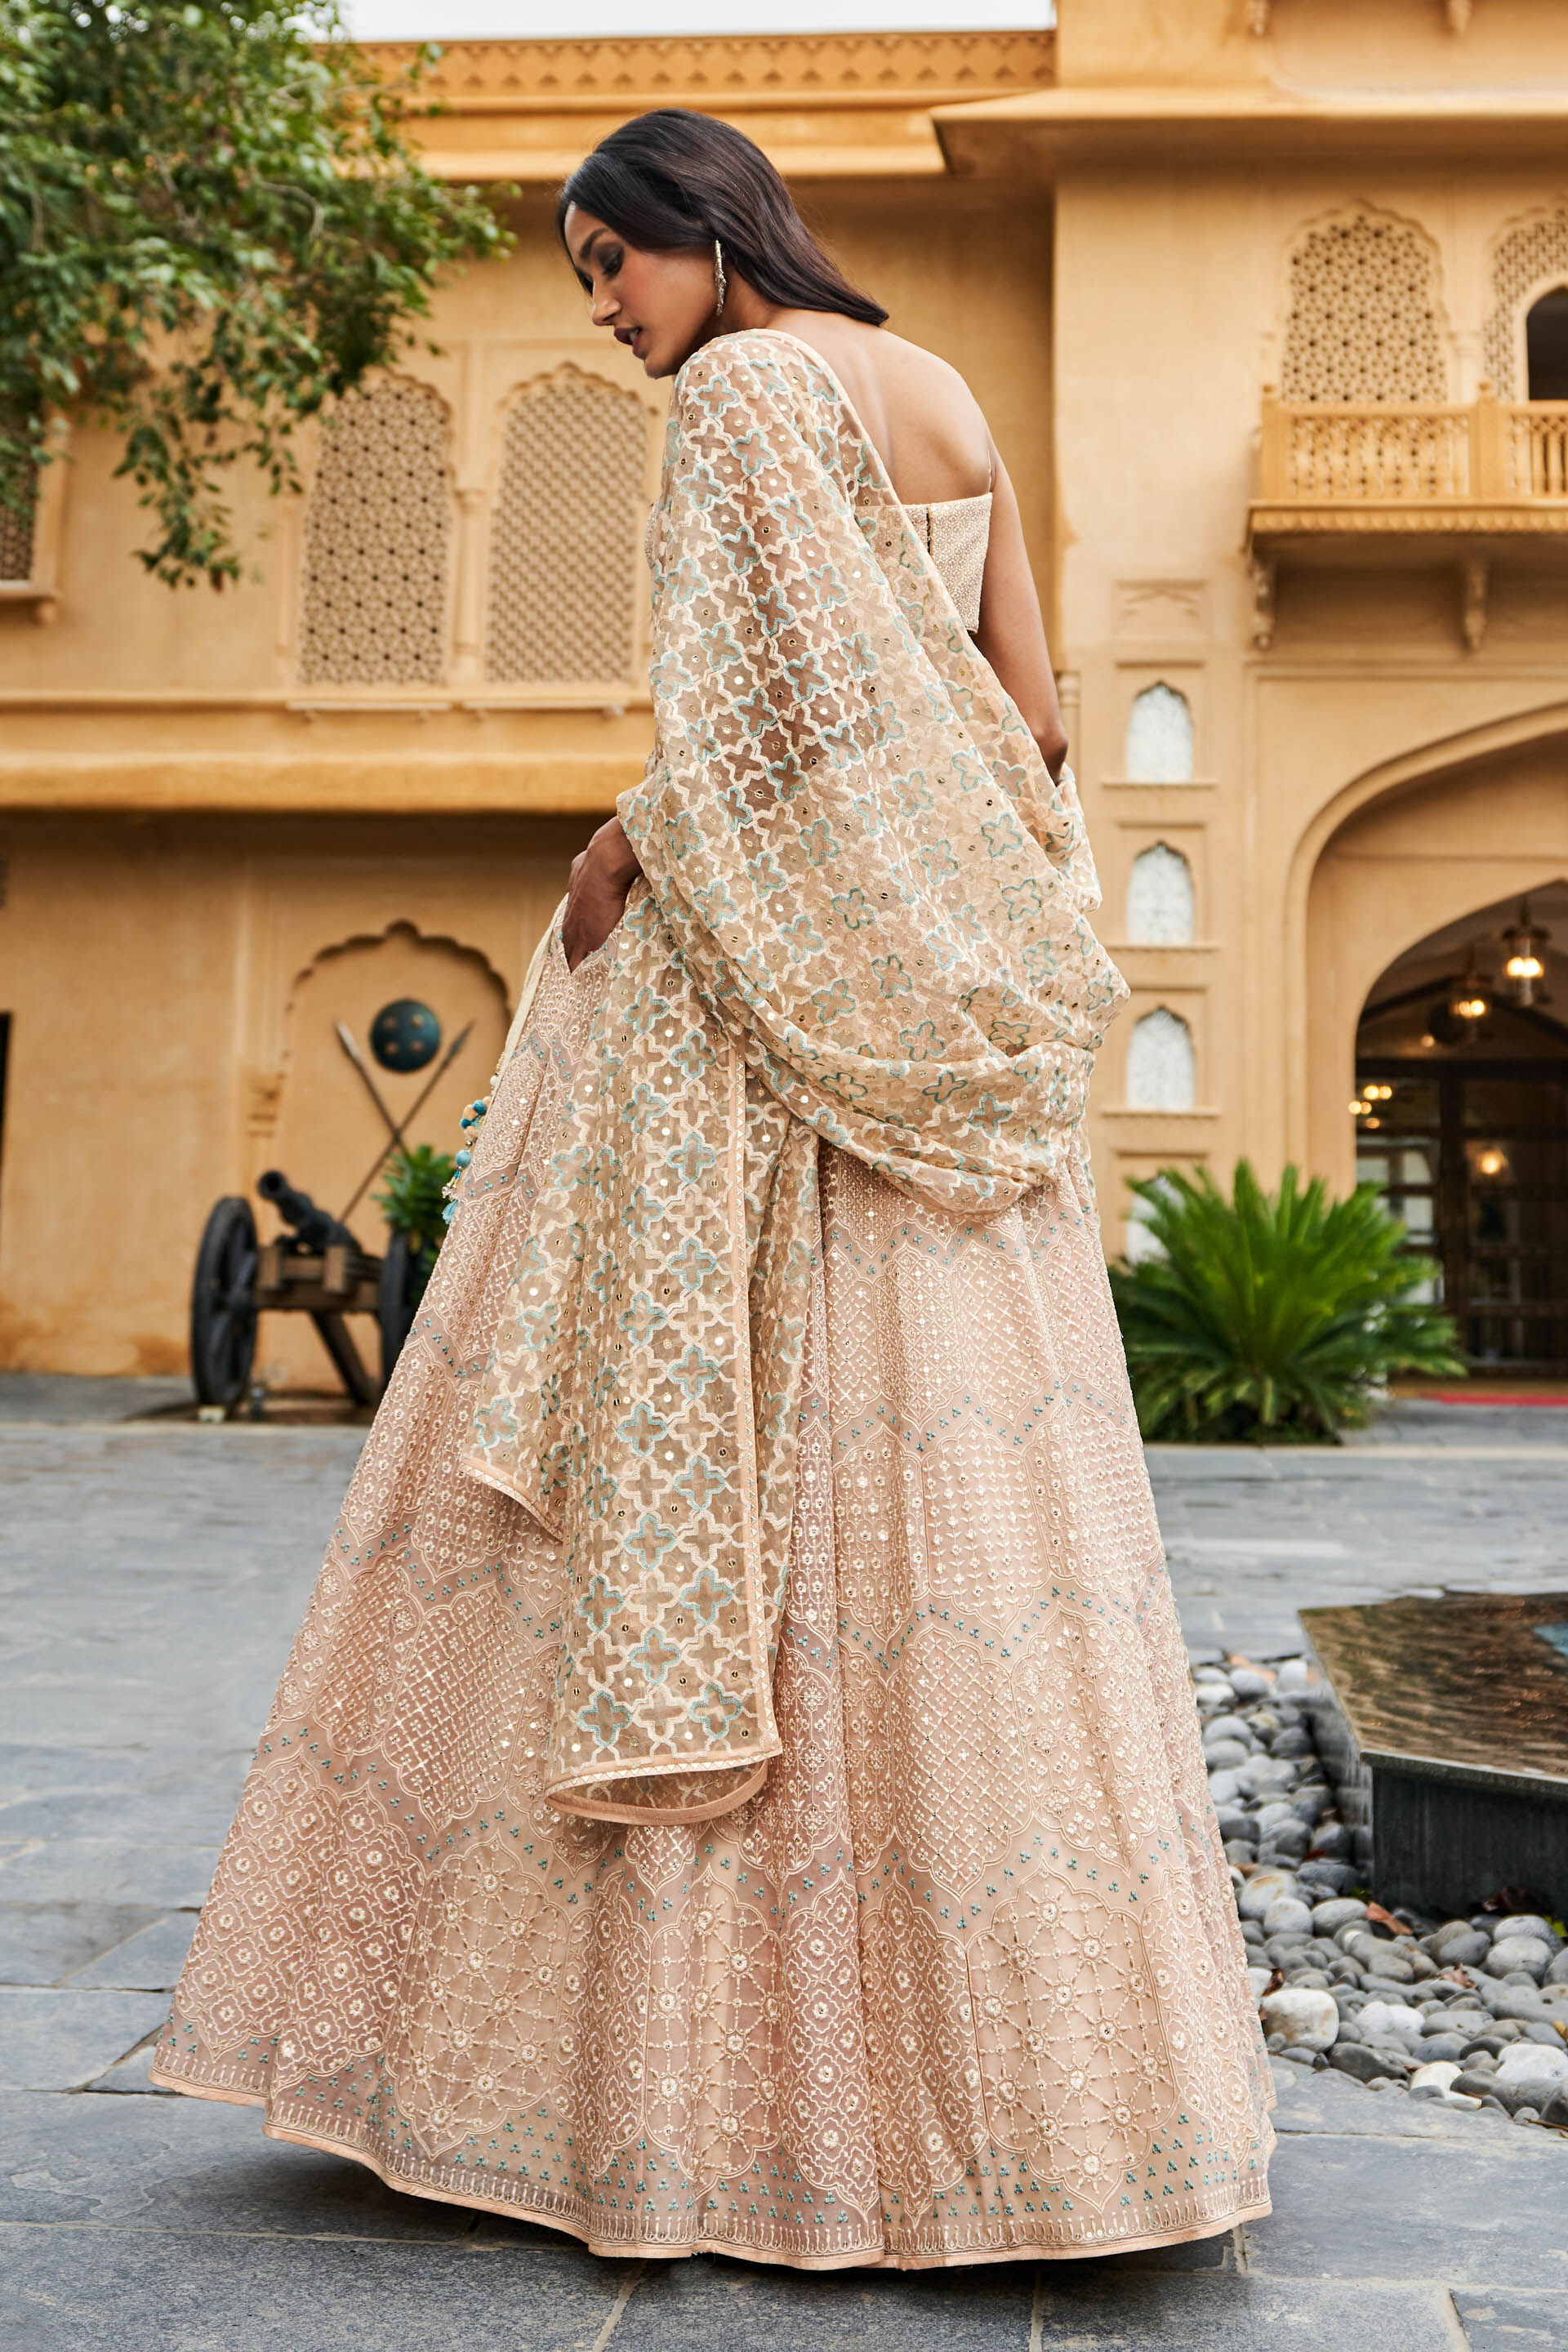 Anita Dongre via carmaonlineshop  Fashion dress party Indian fashion  dresses Indian evening gown